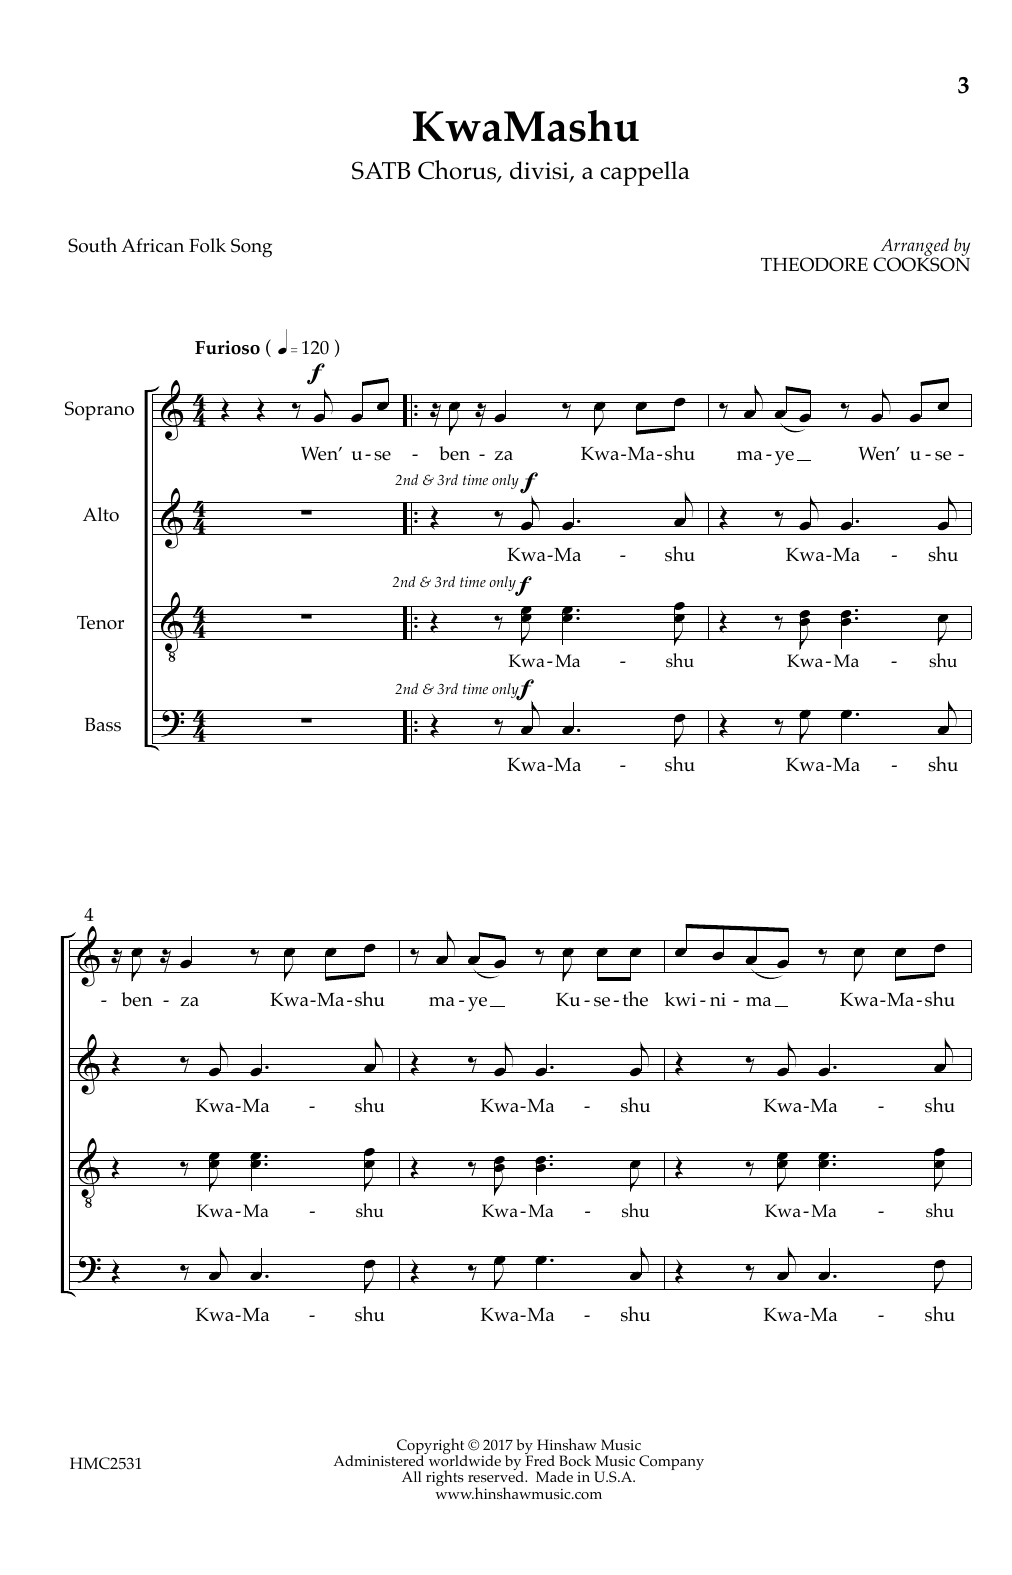 KwaMashu (SATB Choir) von Theodore Cookson